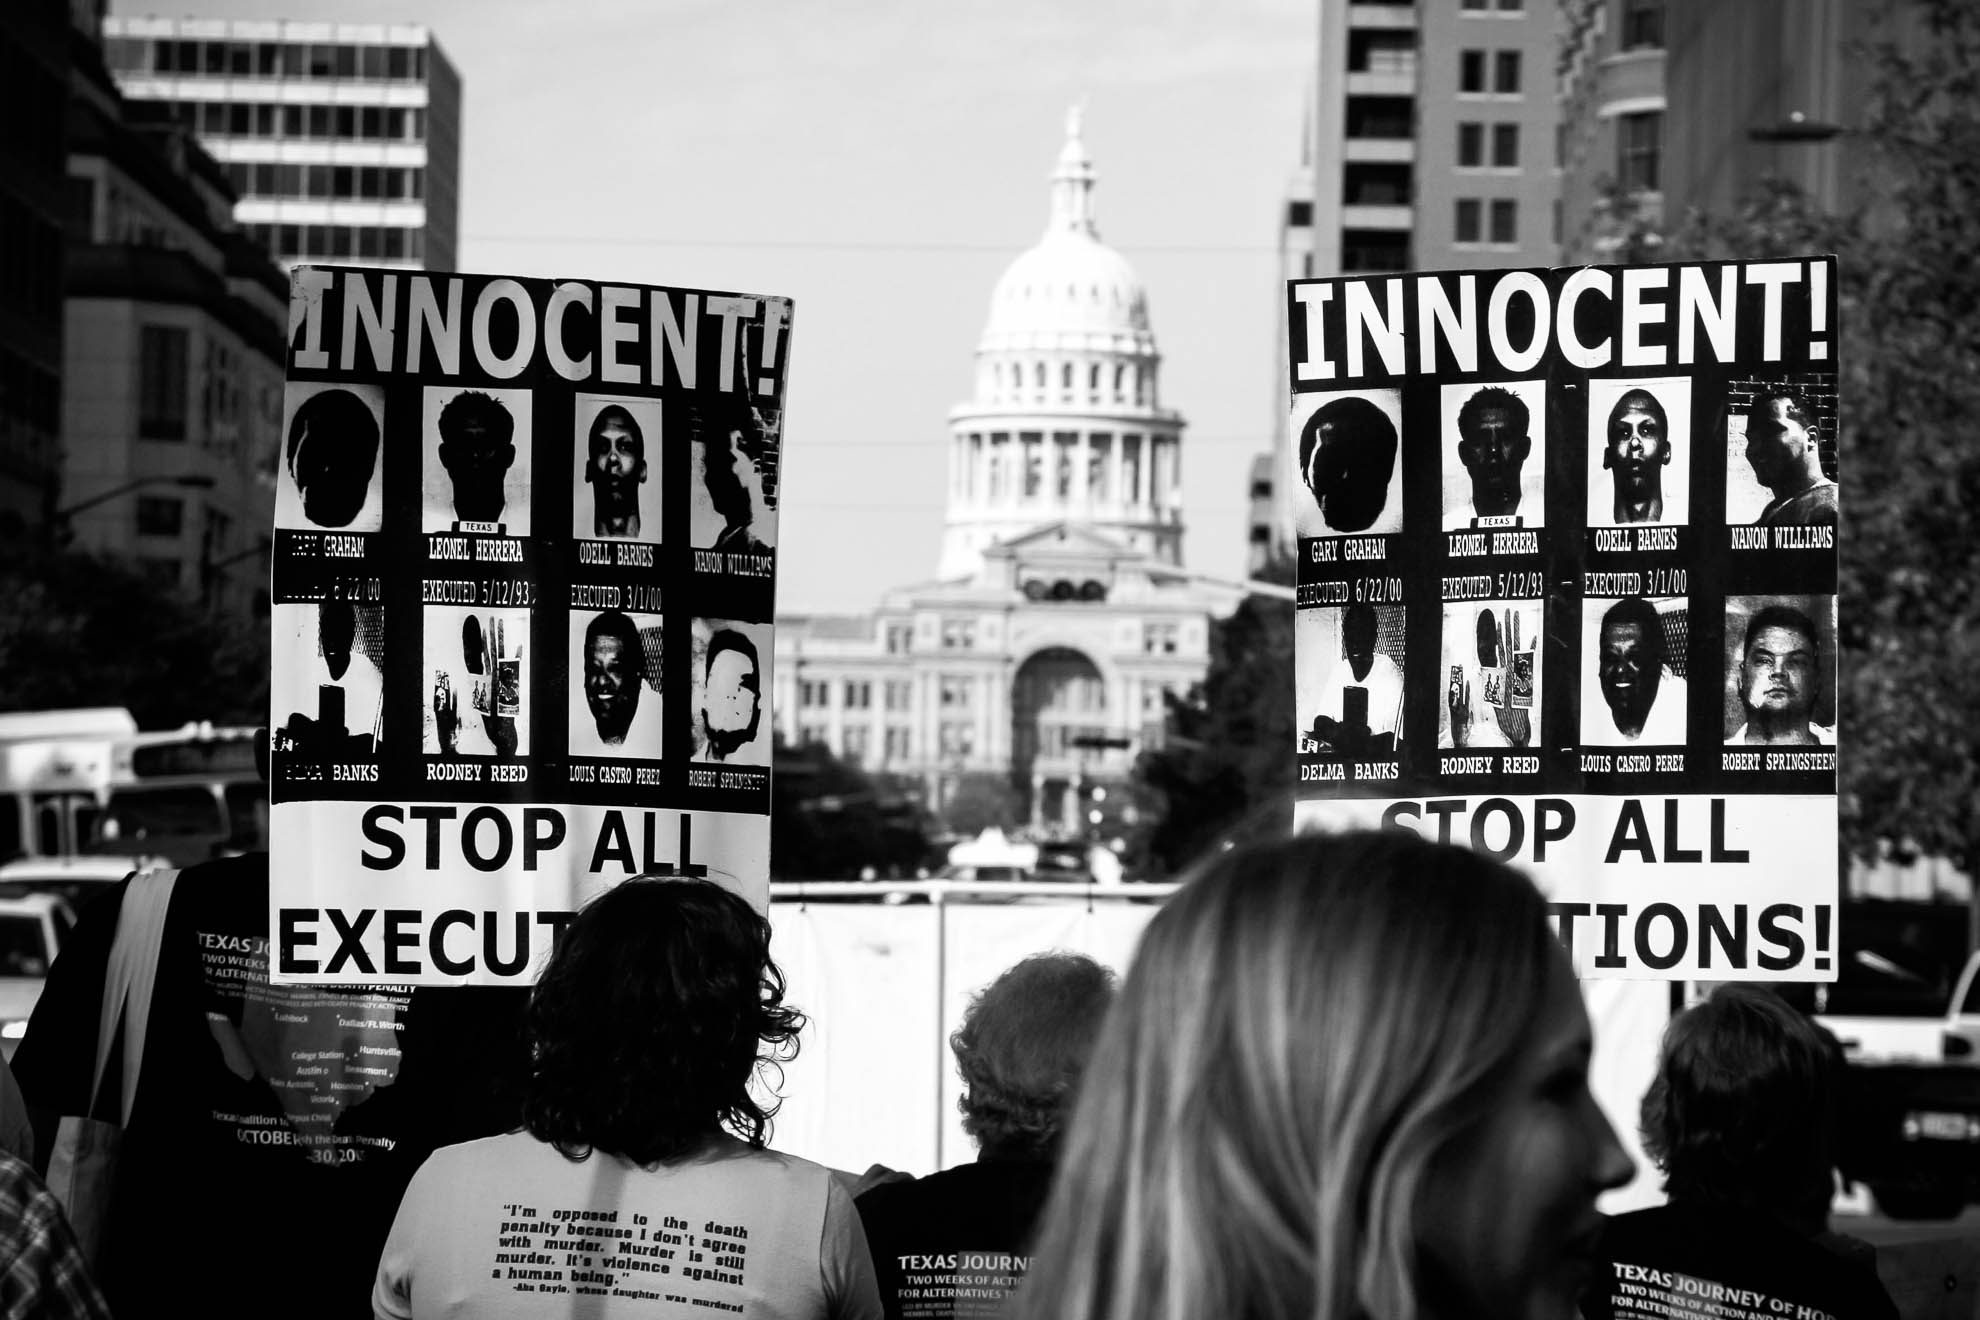 death penalty, photography, photos, execution, prison, documentary, texas, innocence, austin, protest, march